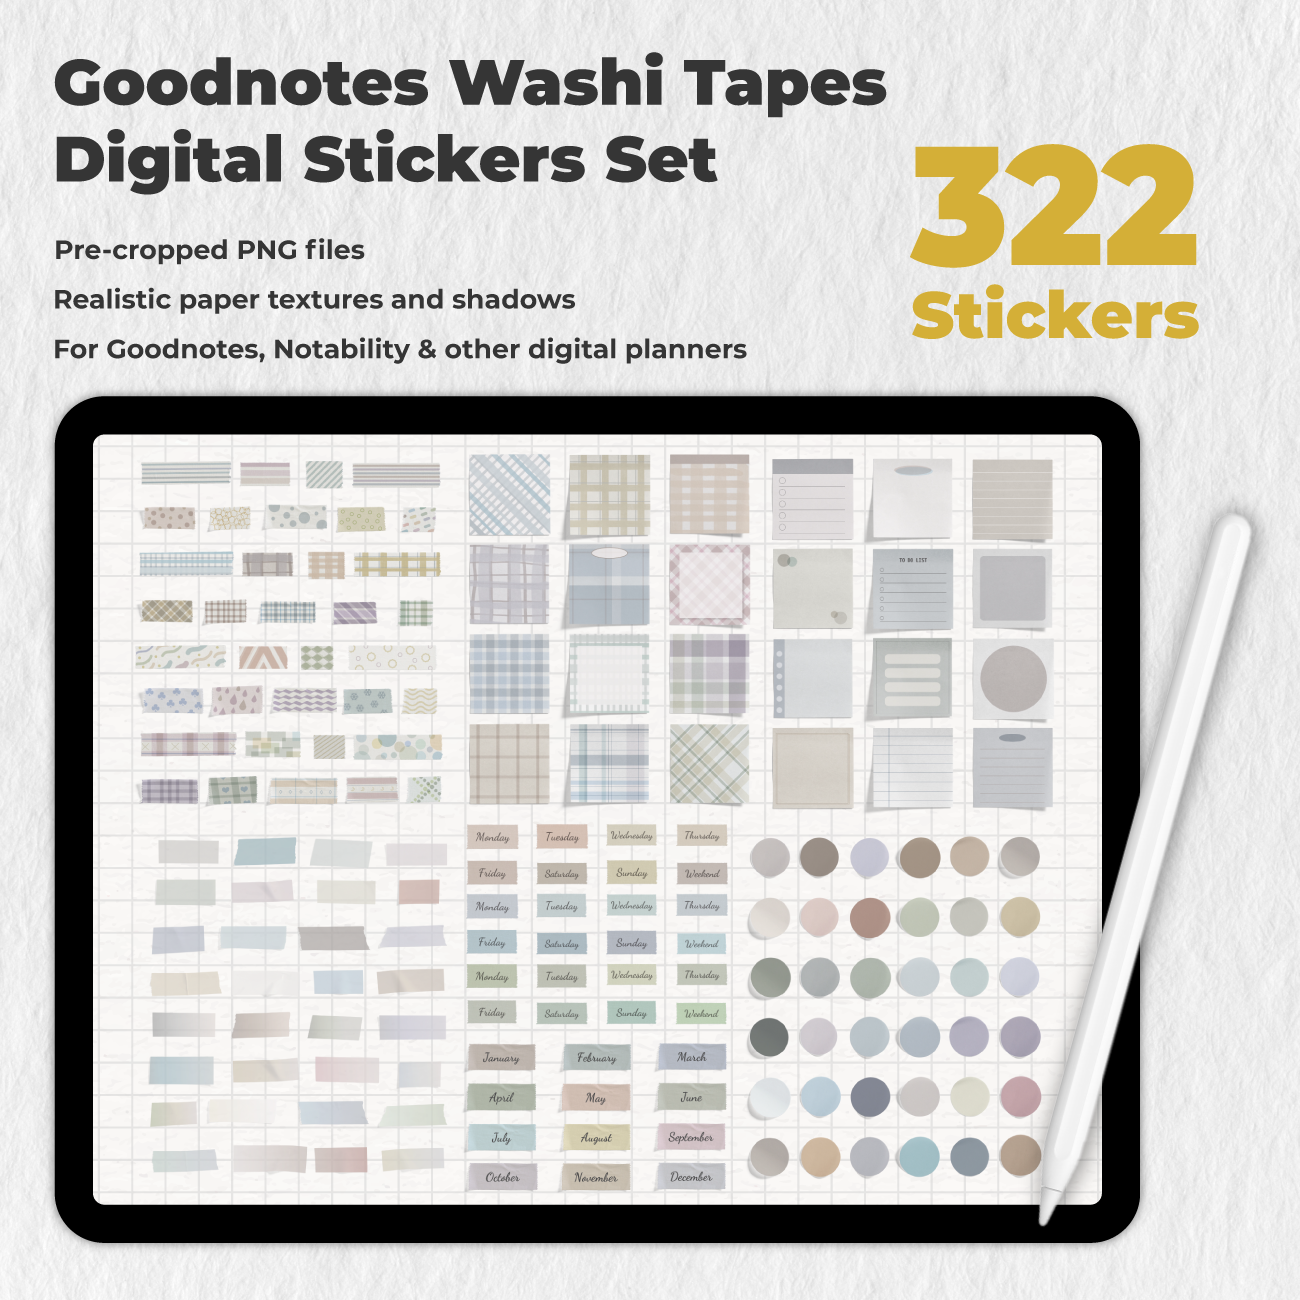 Washi Tape Digital Stickers